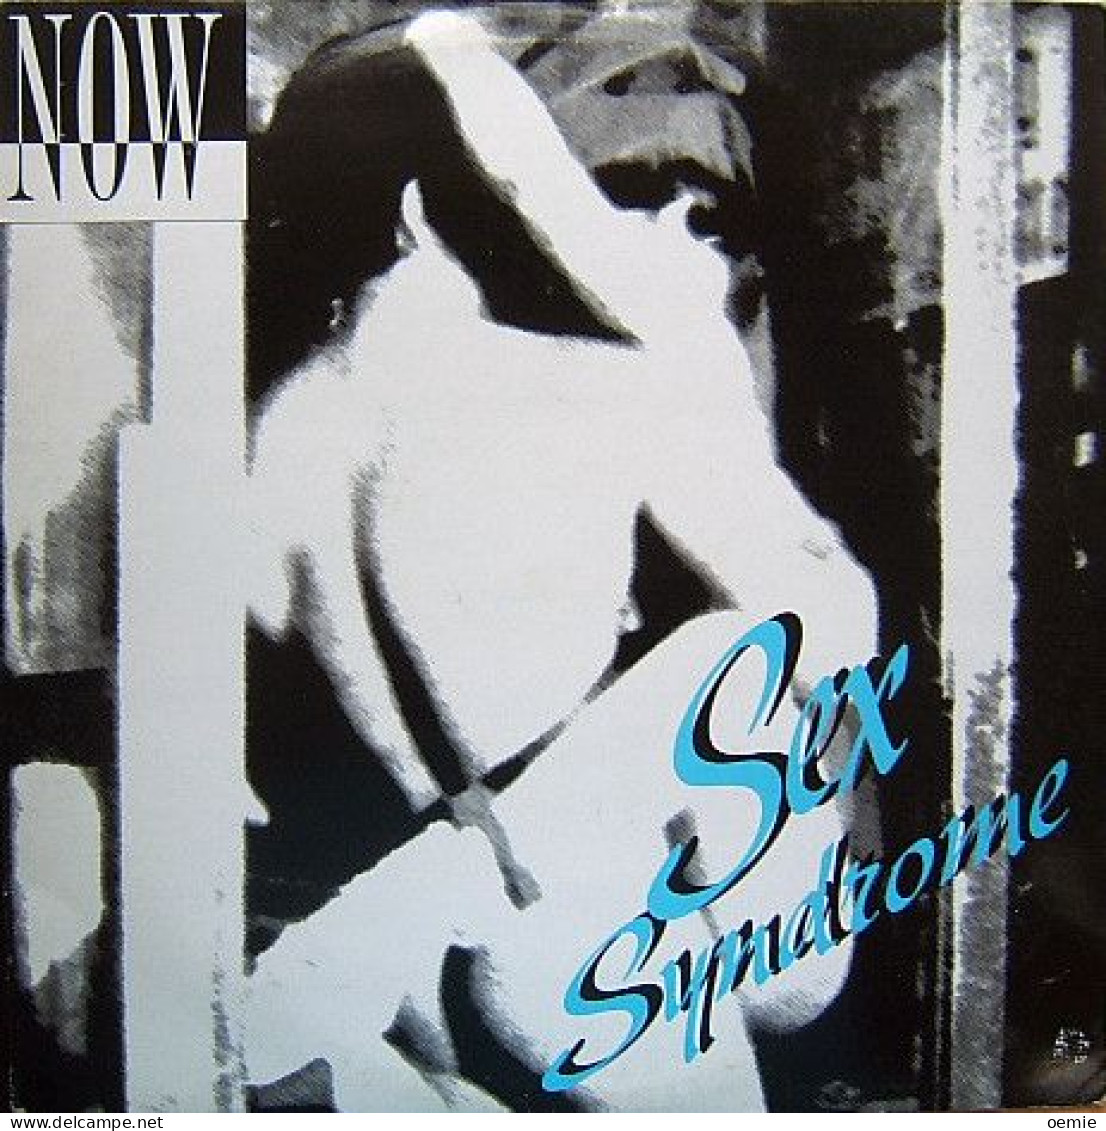 NOW  SEX SYNDROME - 45 Rpm - Maxi-Single